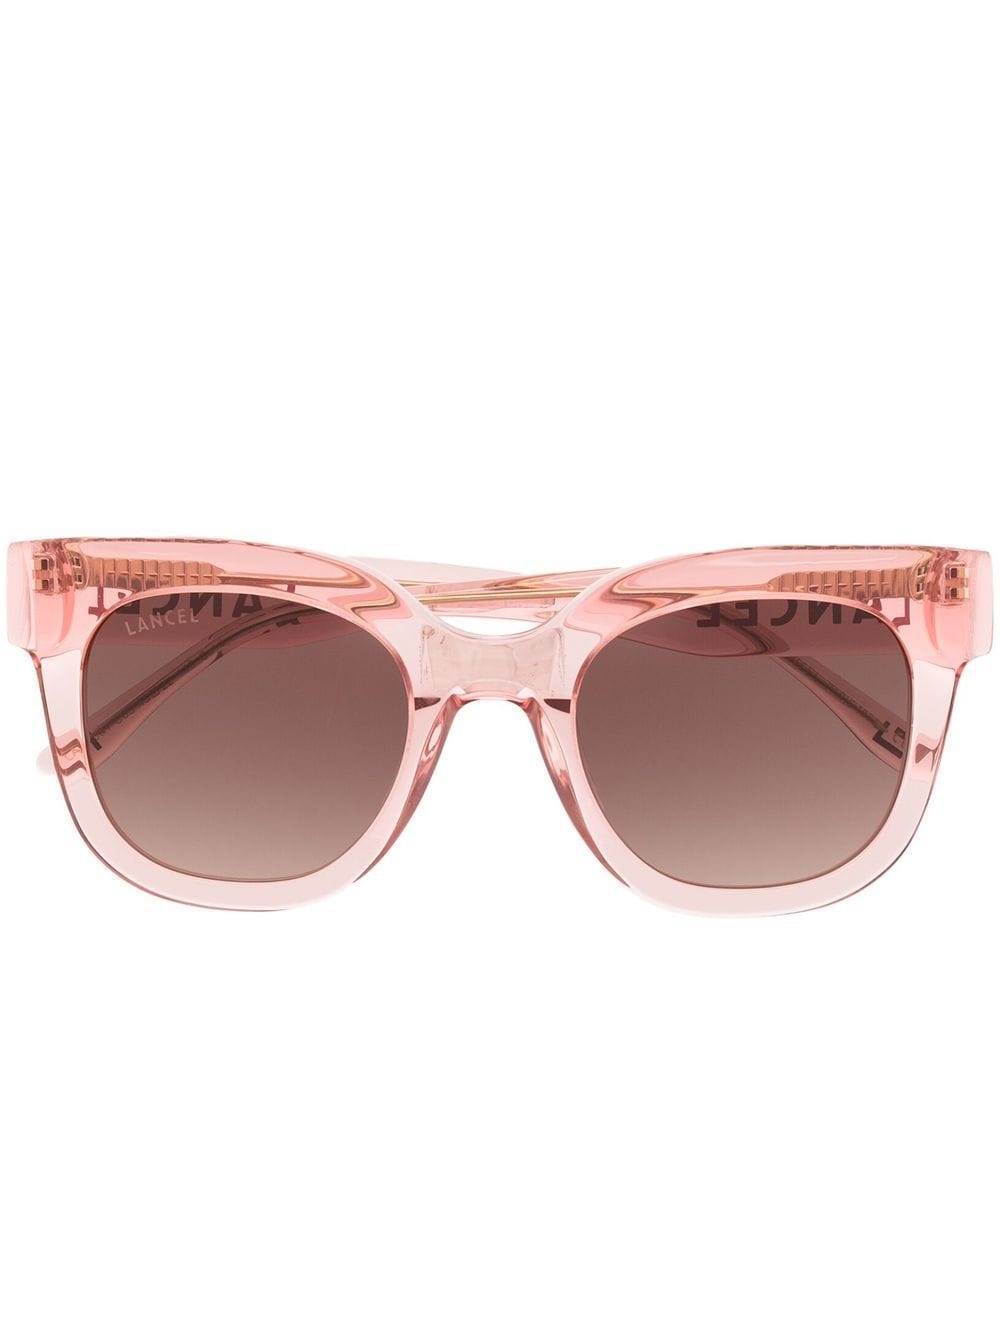 Lancel logo-print tinted sunglasses - Pink von Lancel